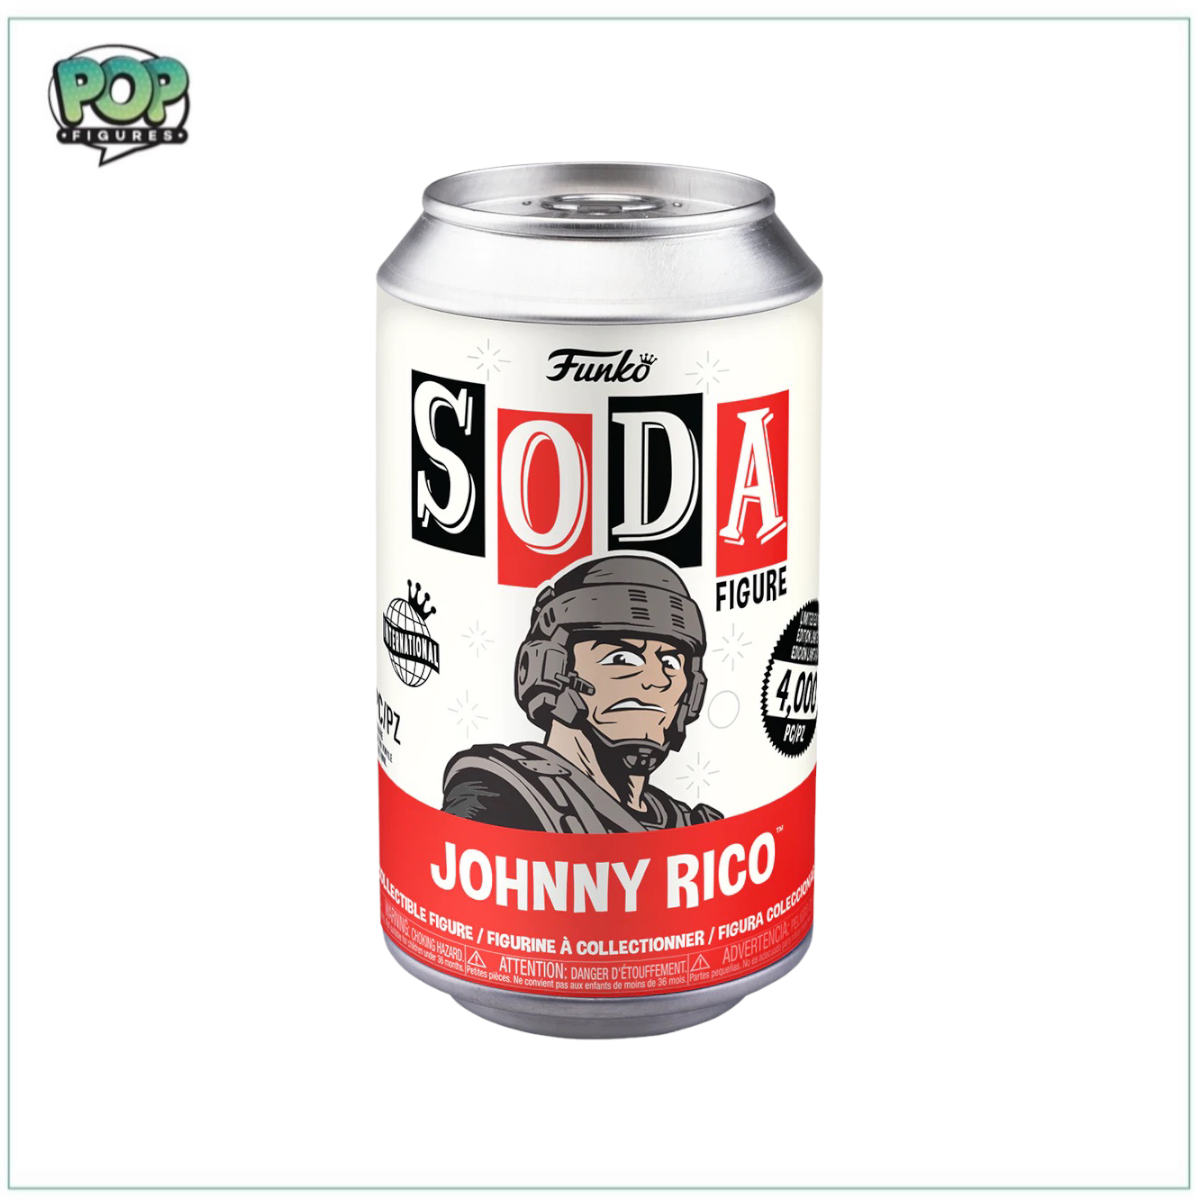 Johnny Rico Funko Soda Vinyl Figure! - Starship Troopers - LE4000 Pcs International - Chance of Chase